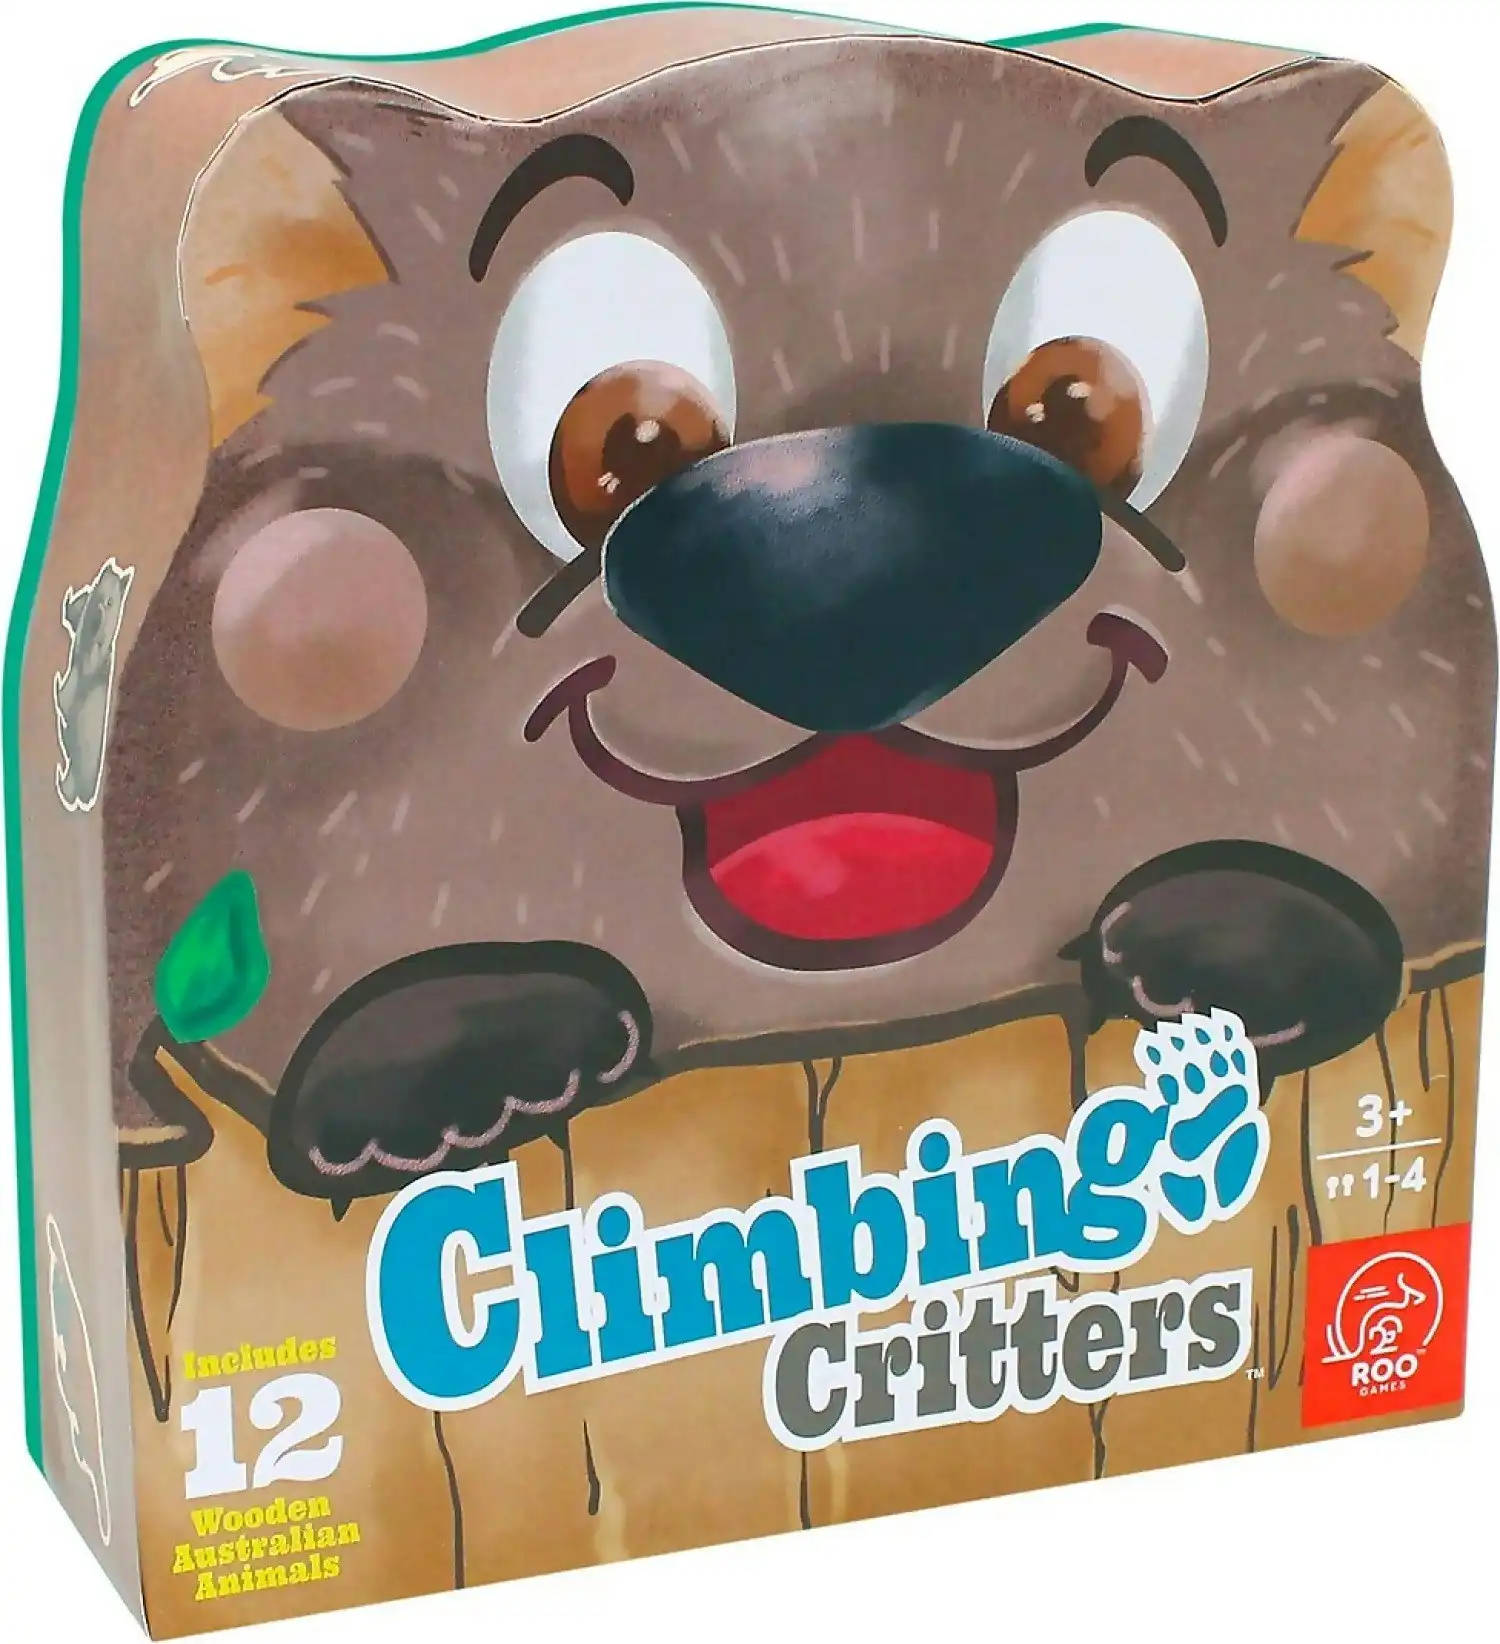 U Games - Climbing Critters - Roo Games